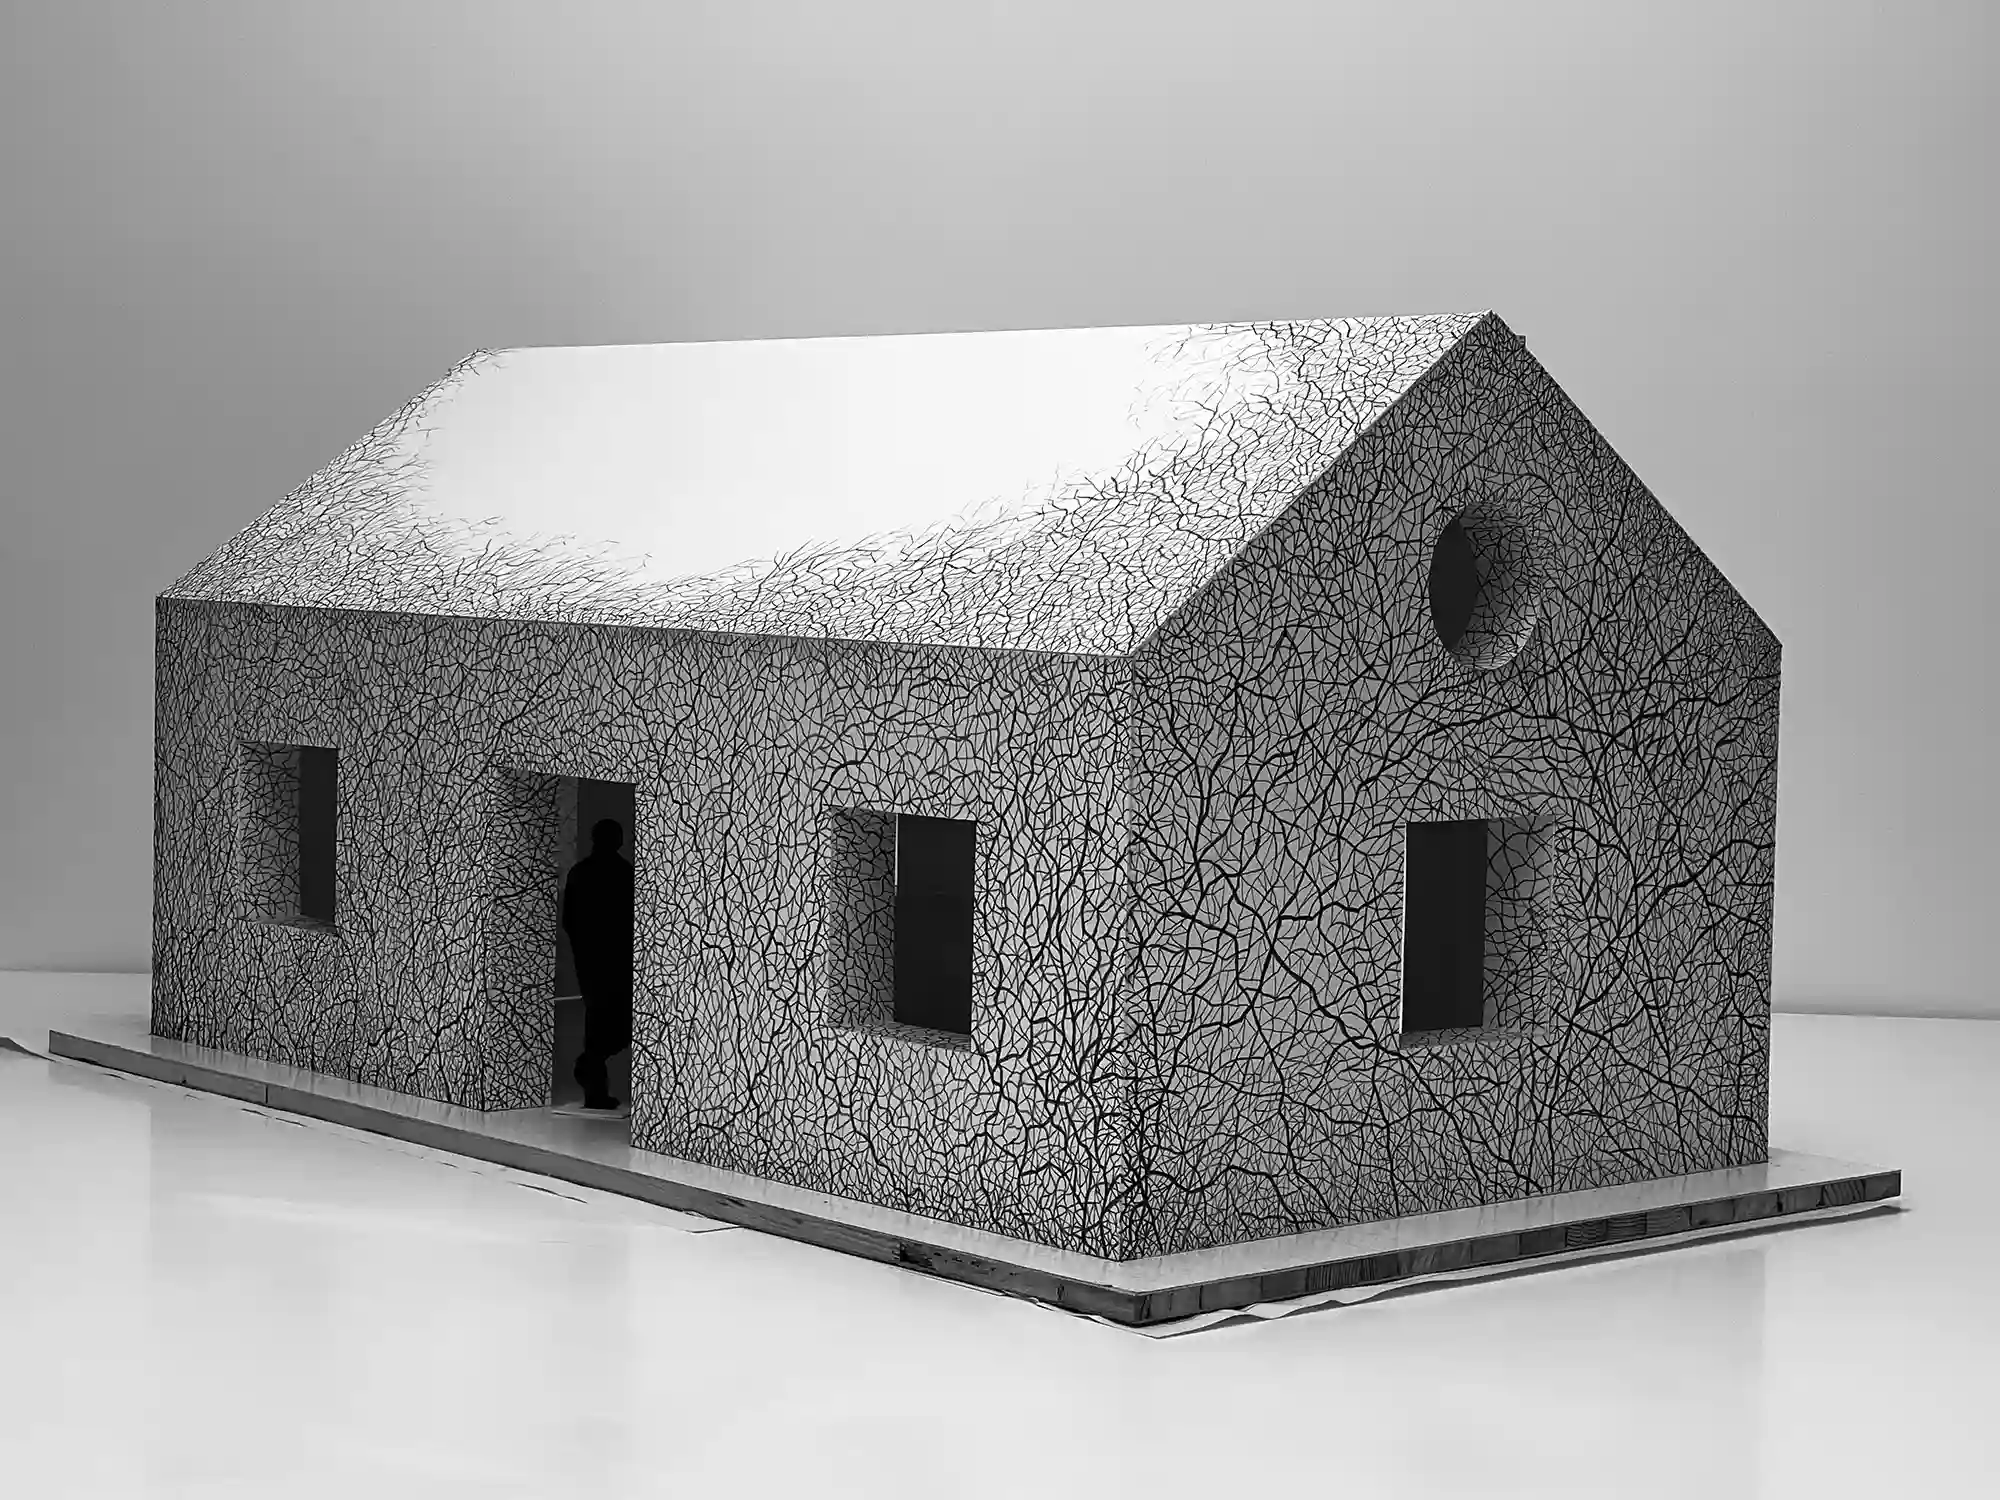 Model of Vanished House